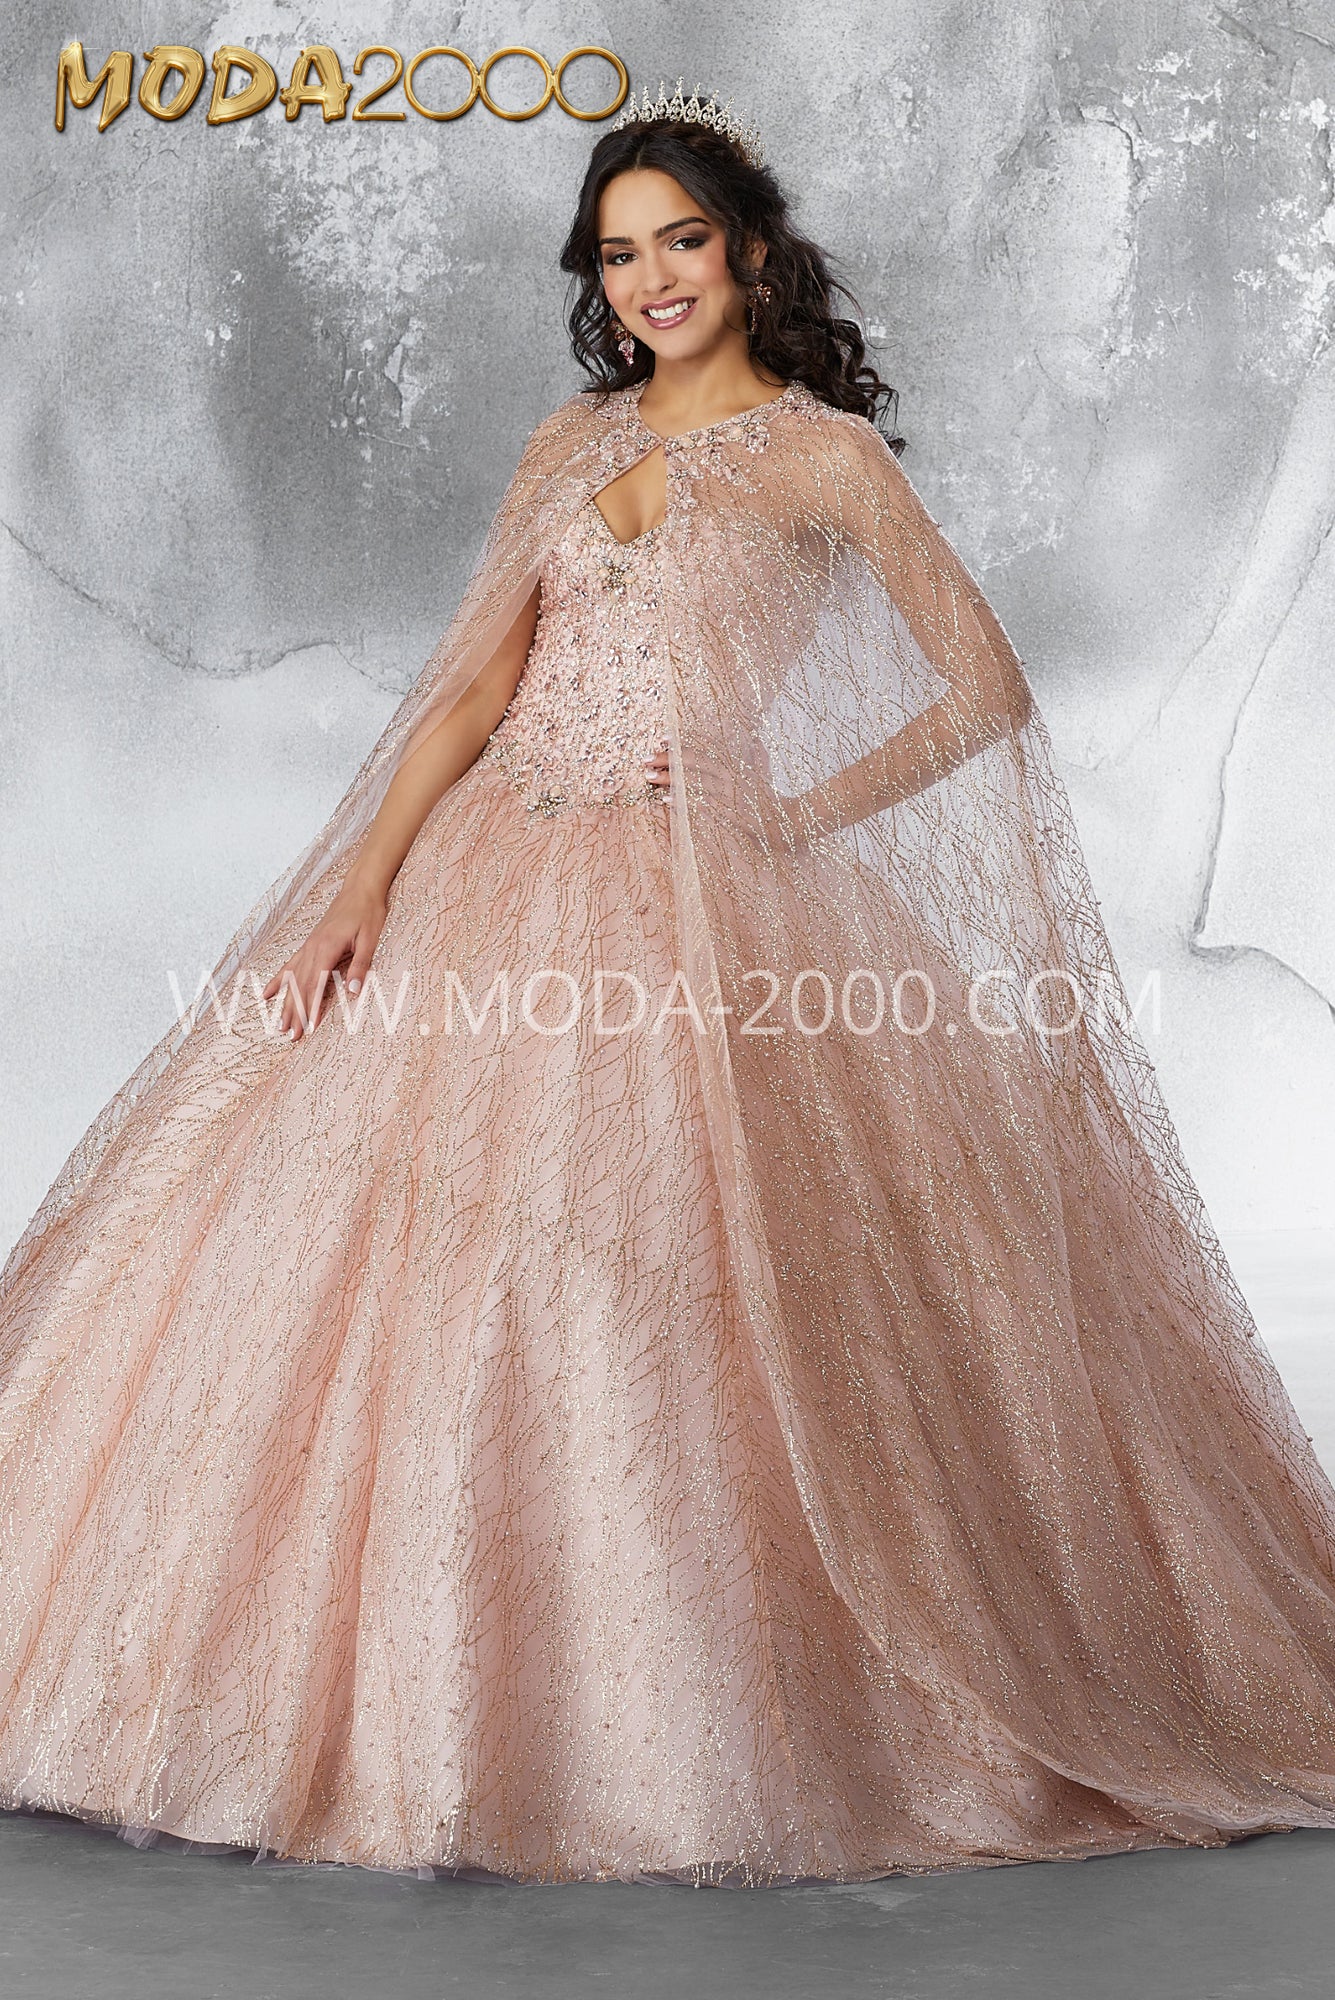 moda 2000 rose gold dress